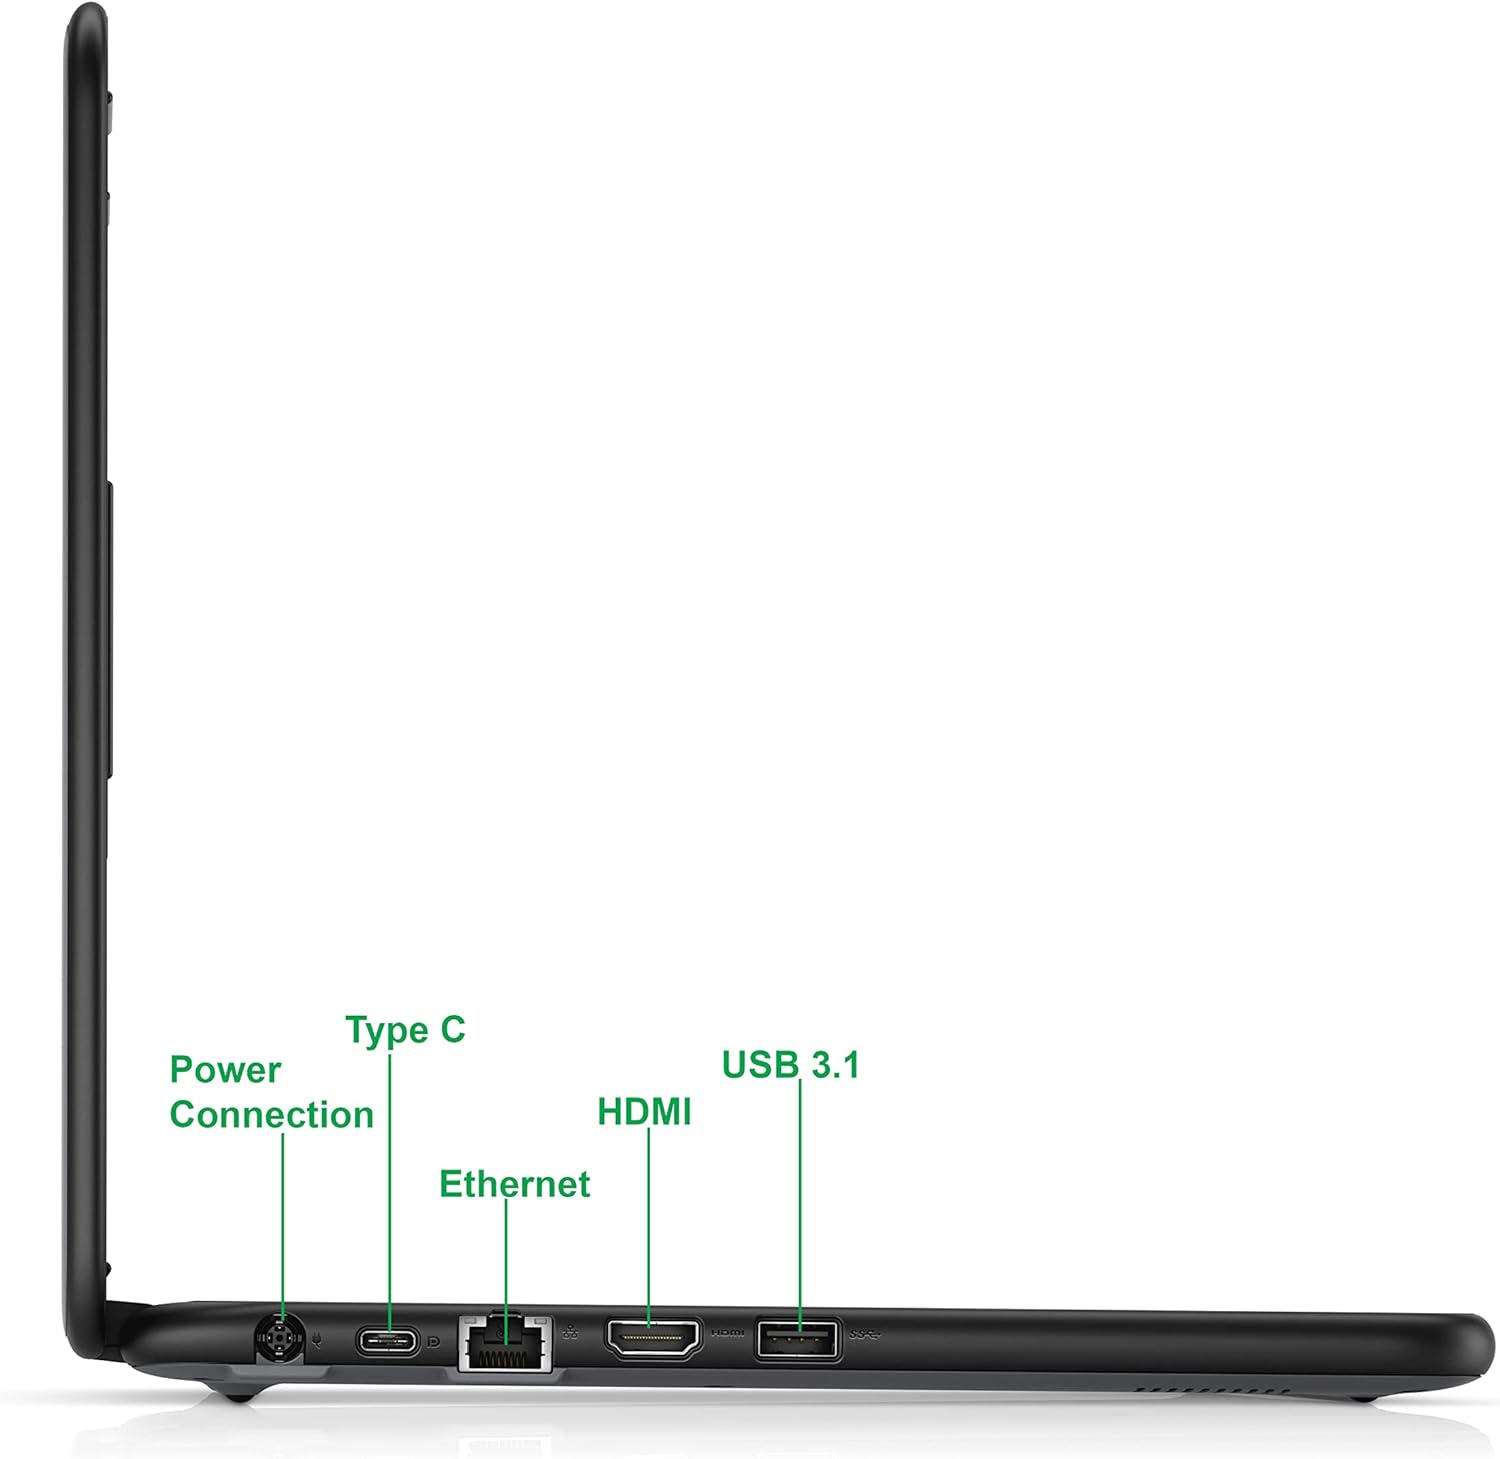 Dell Latitude 3300 13.3-inch Laptop - Intel Core i3 7th Gen - i3-7020U - Dual Core Ghz - 128GB SSD - 8GB RAM - 1366x768 HD - Windows 10 Pro (Renewed)